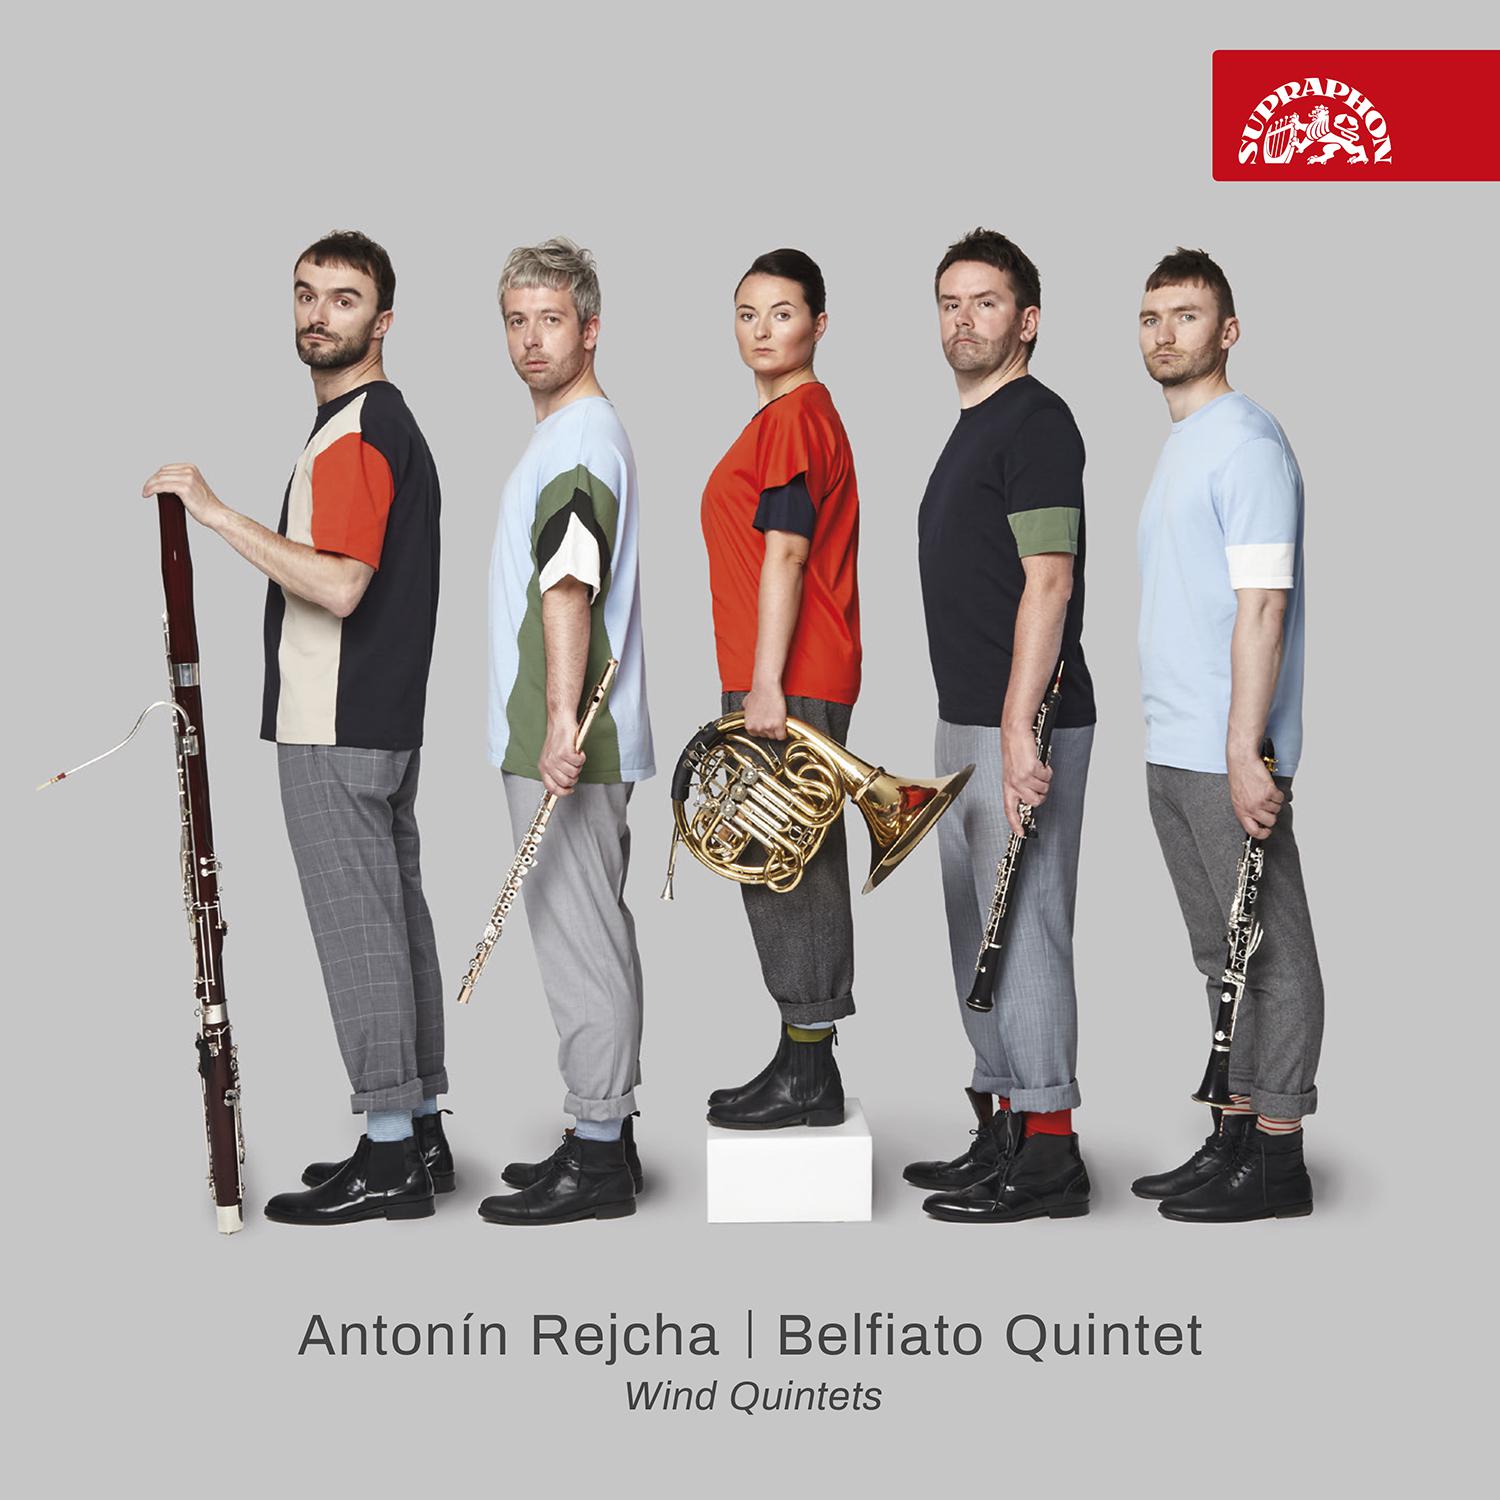 Belfiato Quintet - Wind Quintet in E-Flat Major, Op. 88 No. 2:No. 2, Menuetto. Allegro